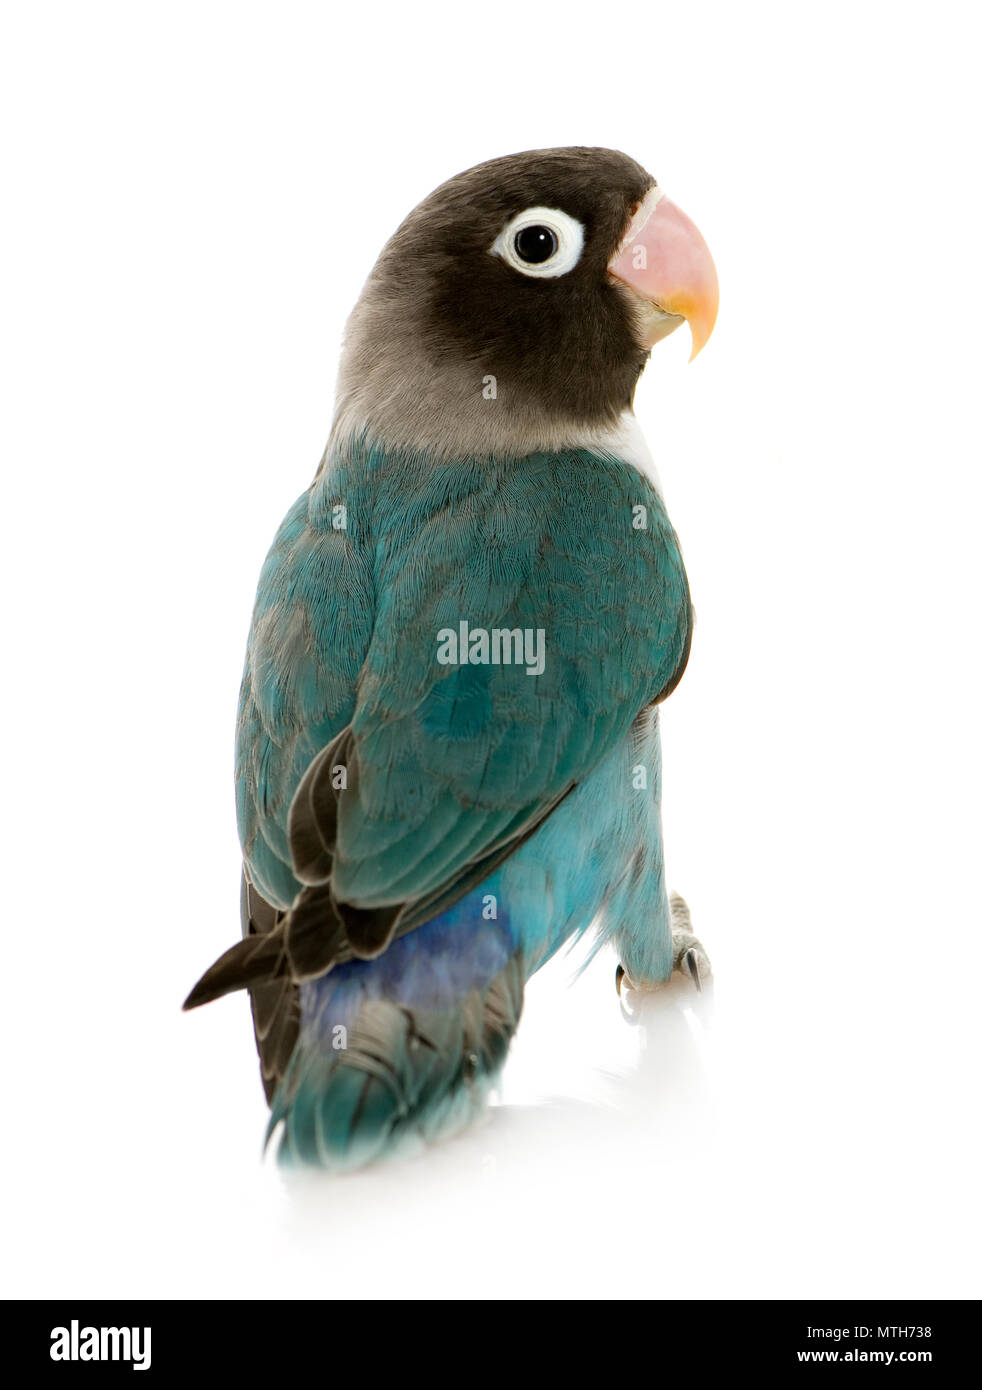 Lovebird masked stock photography images - Alamy